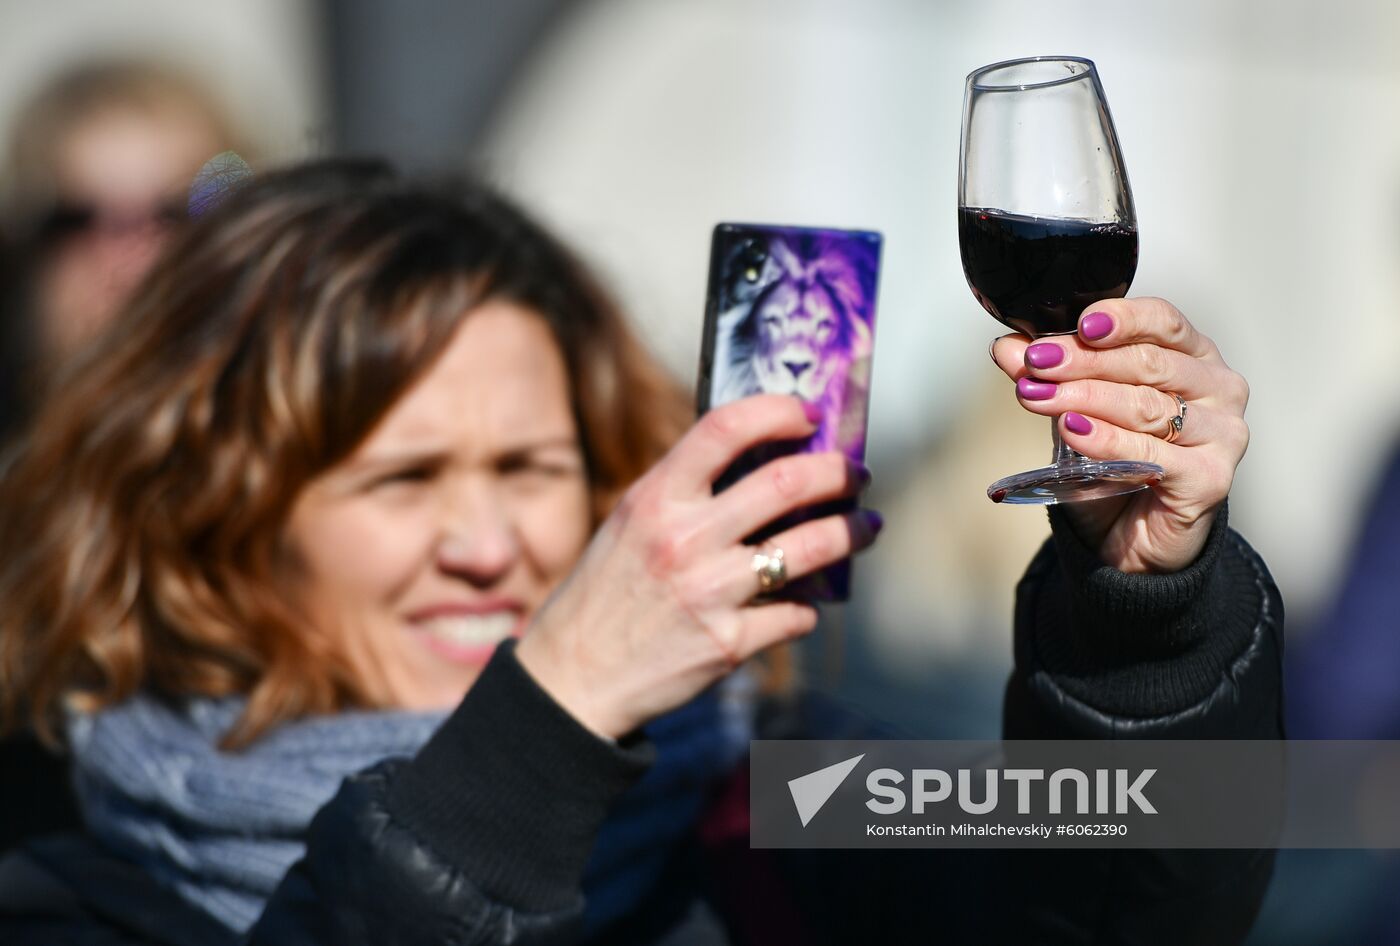 Russia Crimea Wine Festival